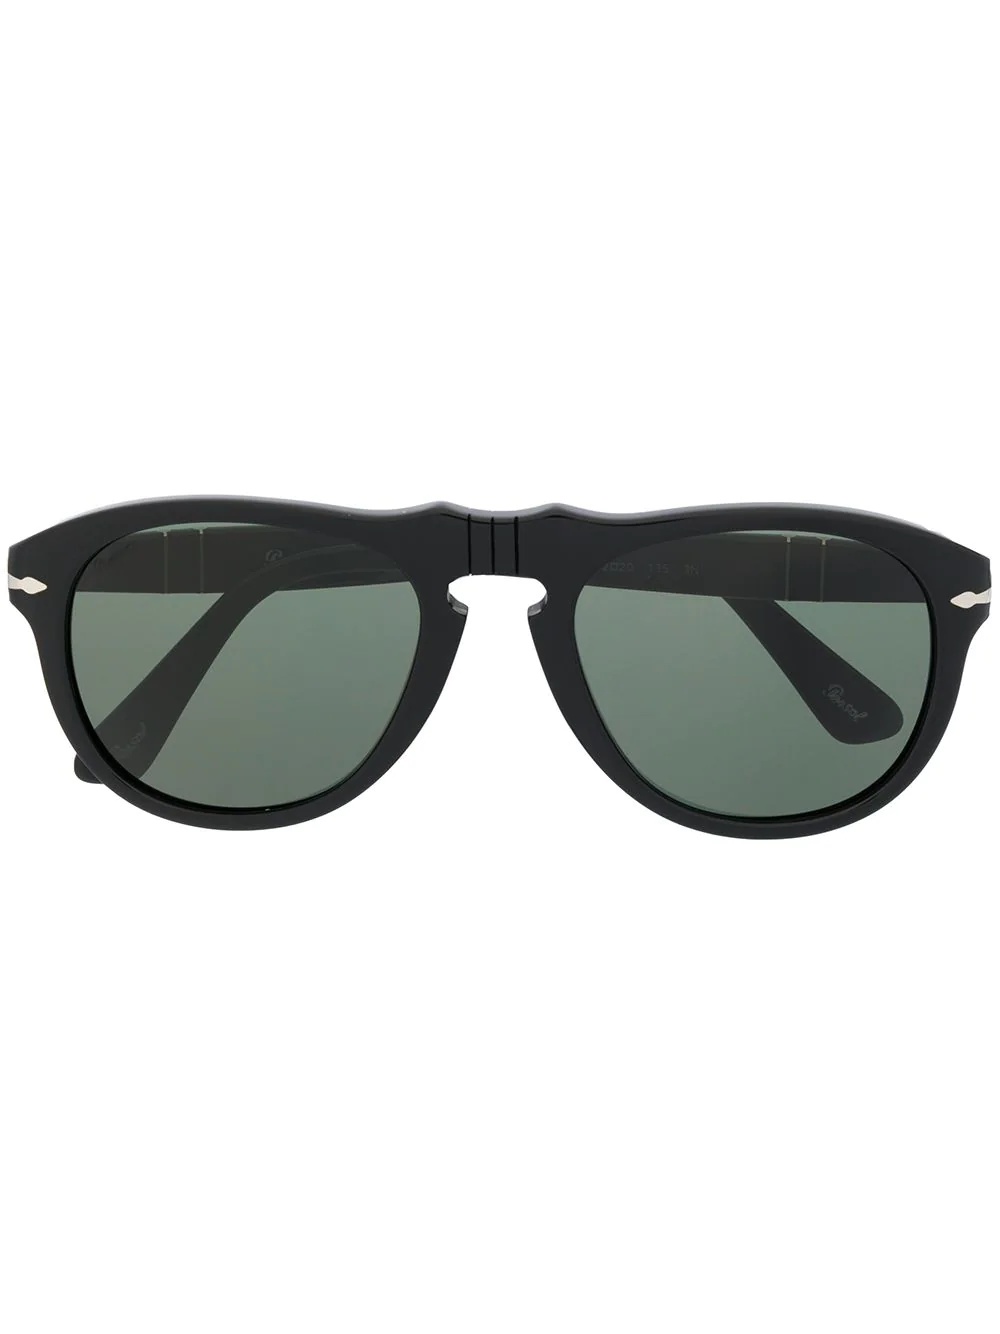 aviator-style sunglasses - 1